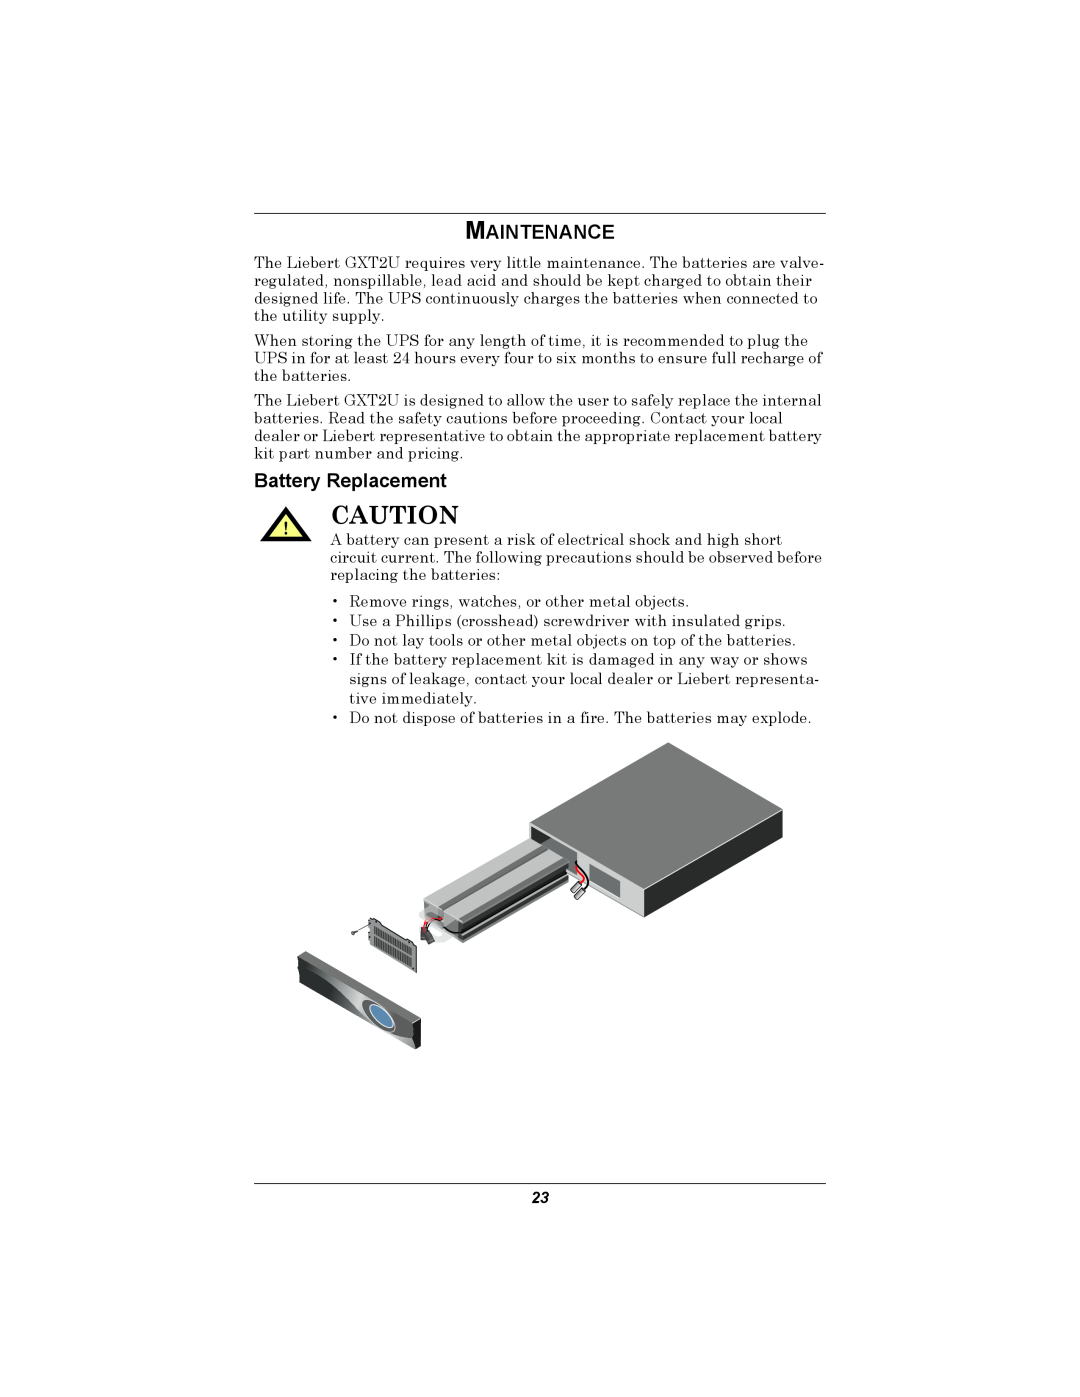 Emerson GXT2U user manual Maintenance, Battery Replacement 